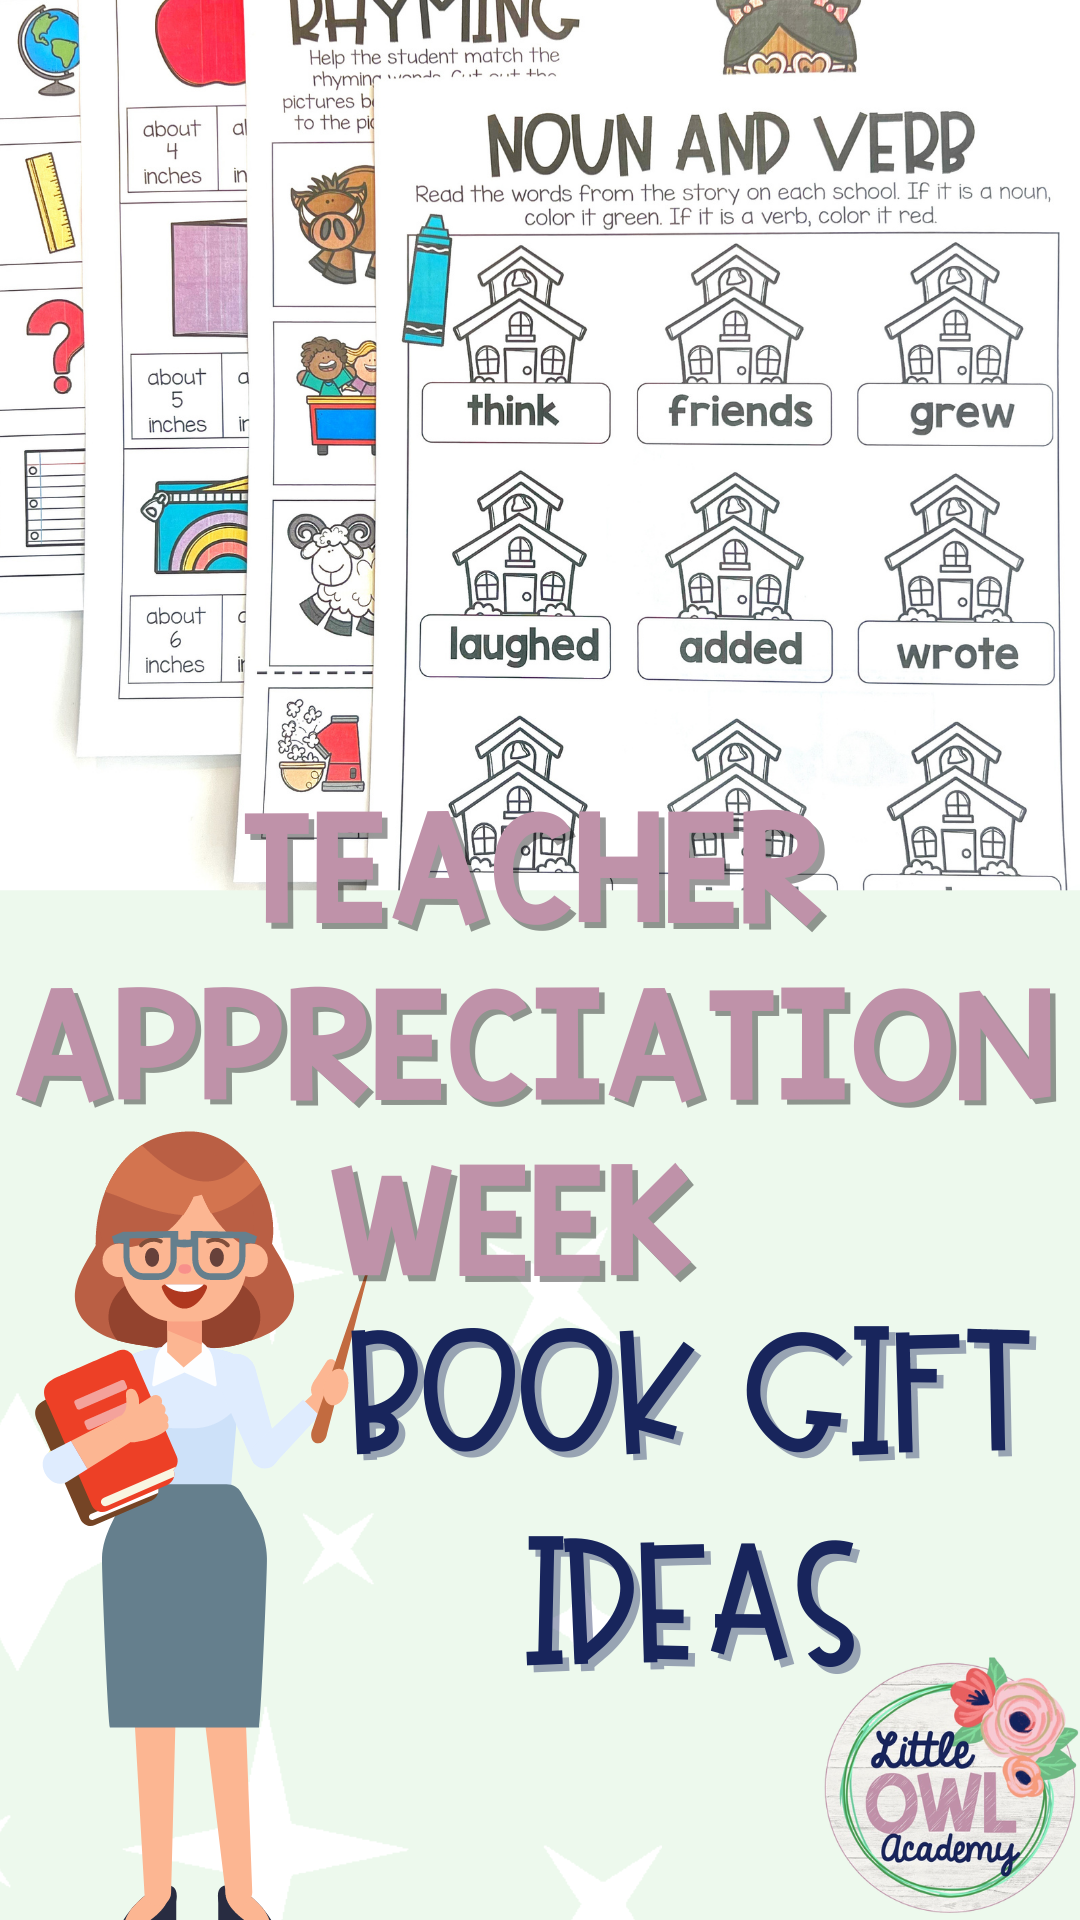 Book Ideas for Teacher Appreciation Gifts